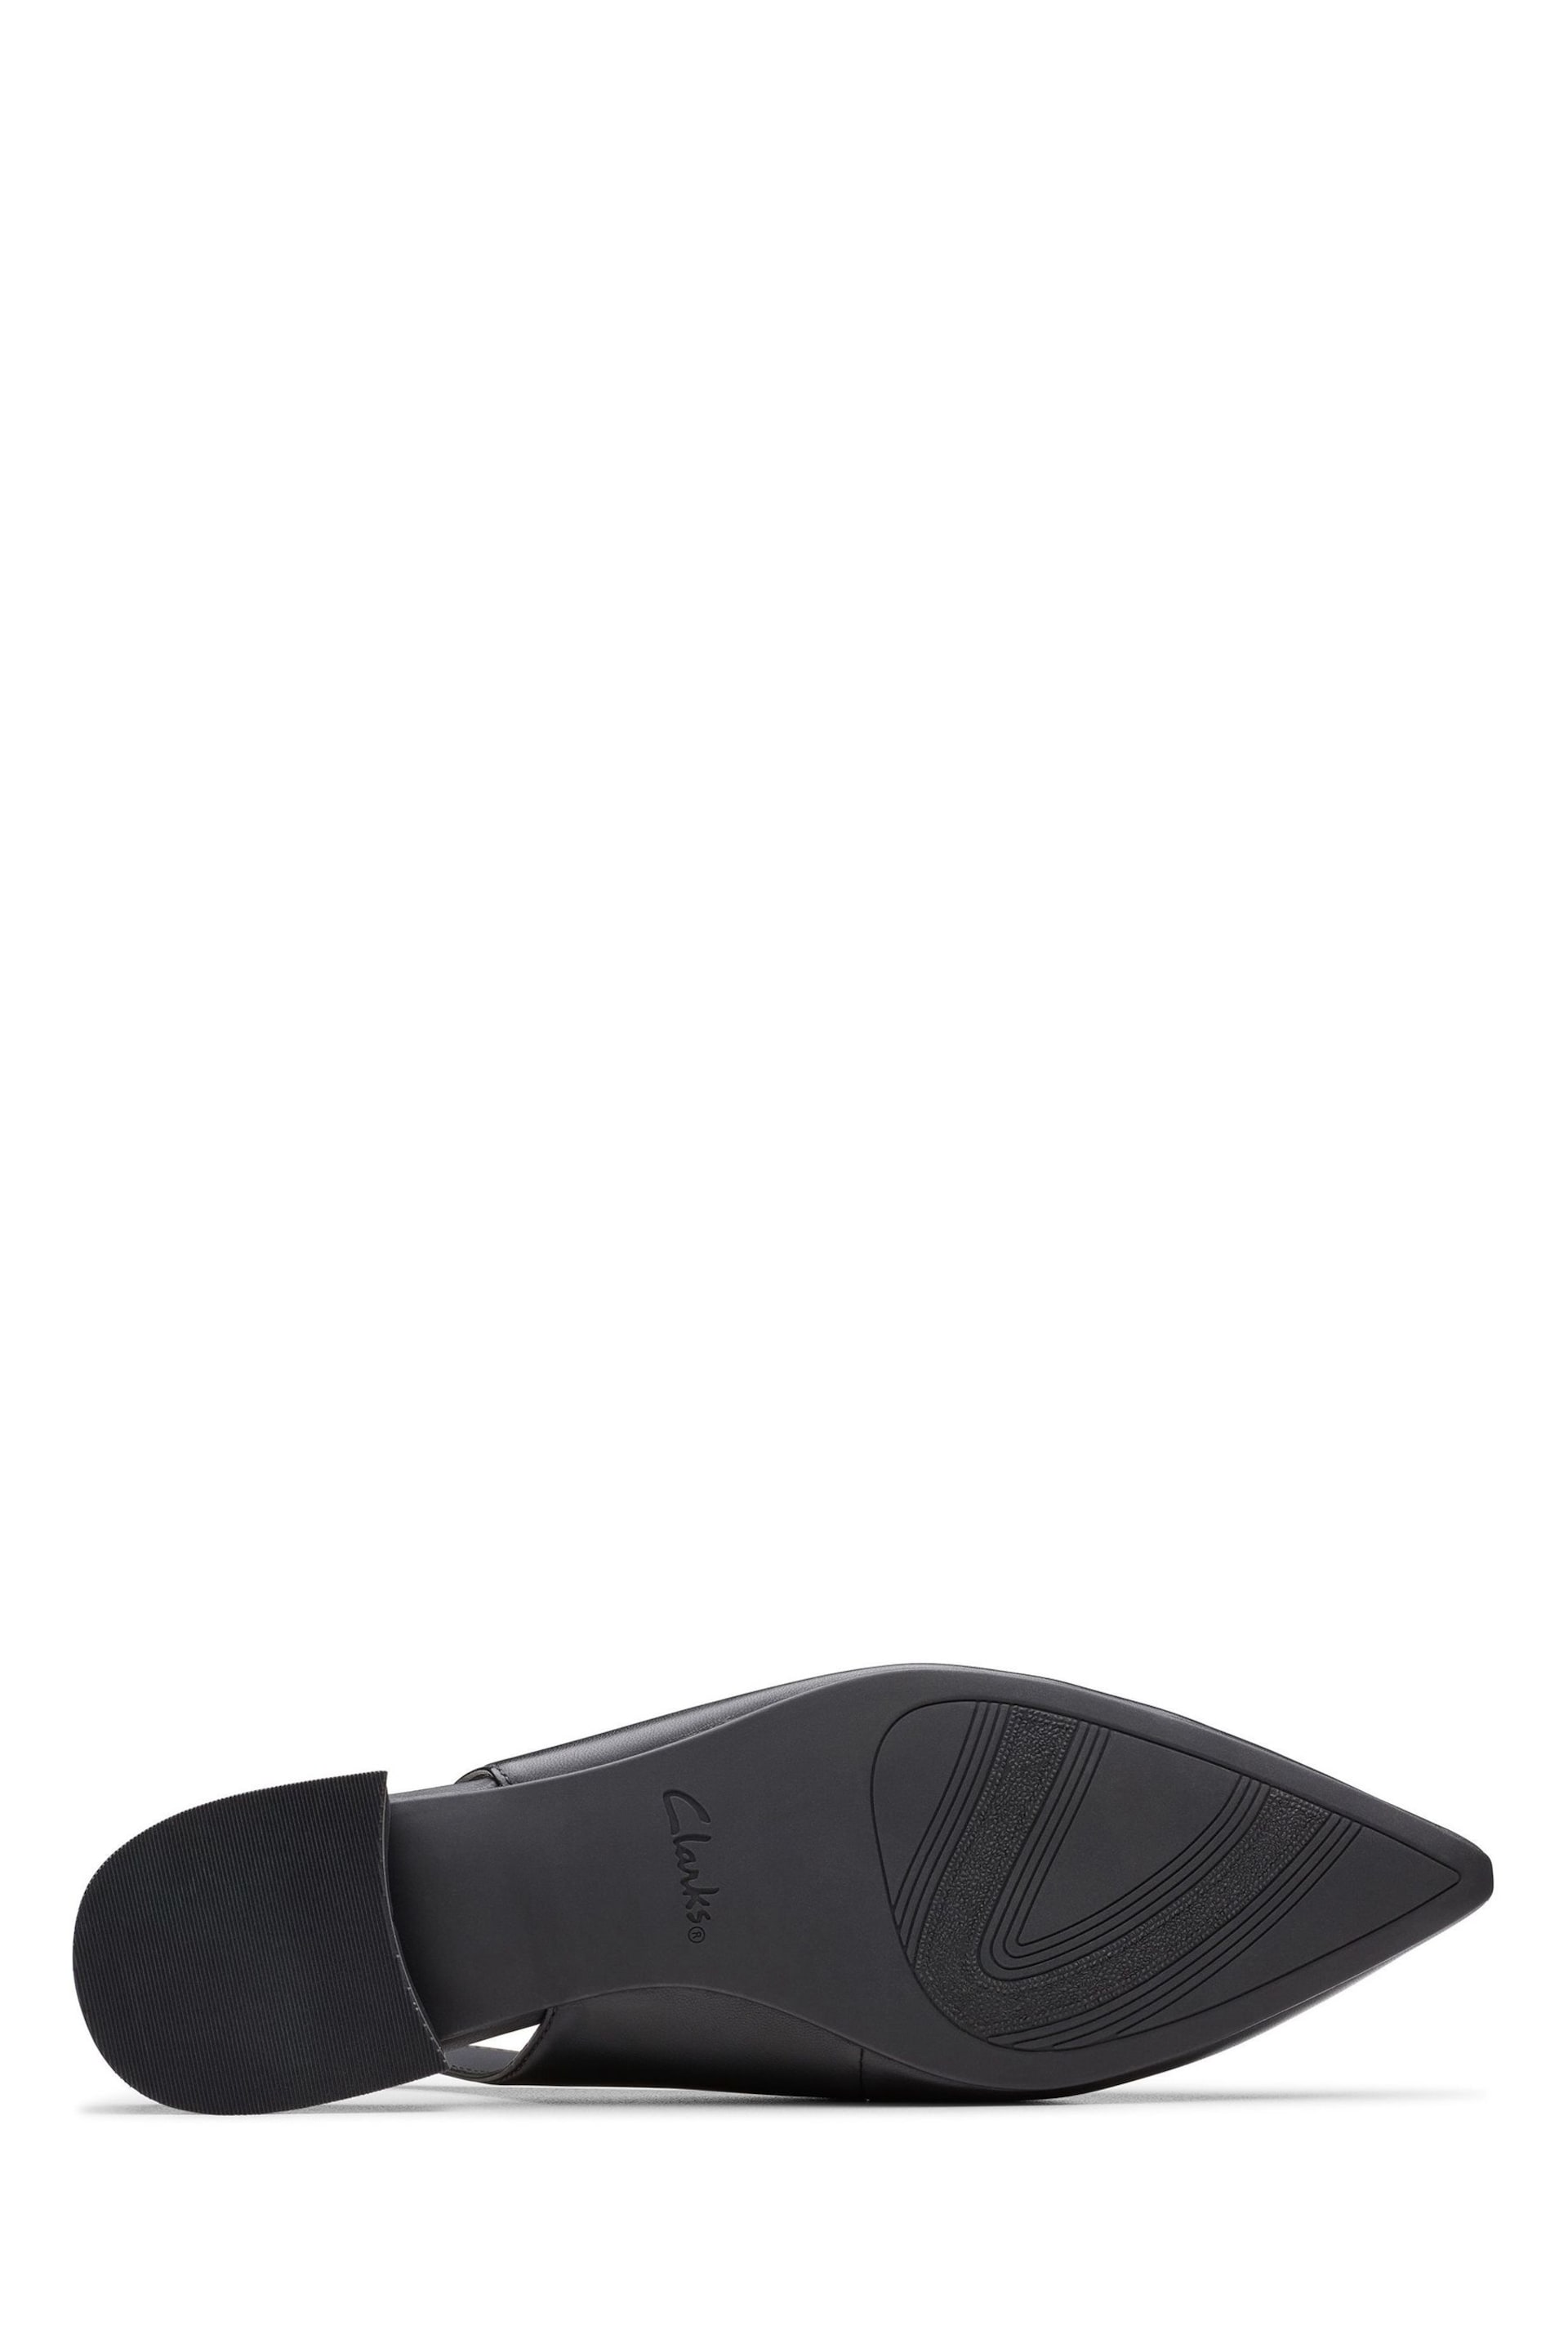 Clarks Black Leather Sensa 15 Sligback Shoes - Image 6 of 7